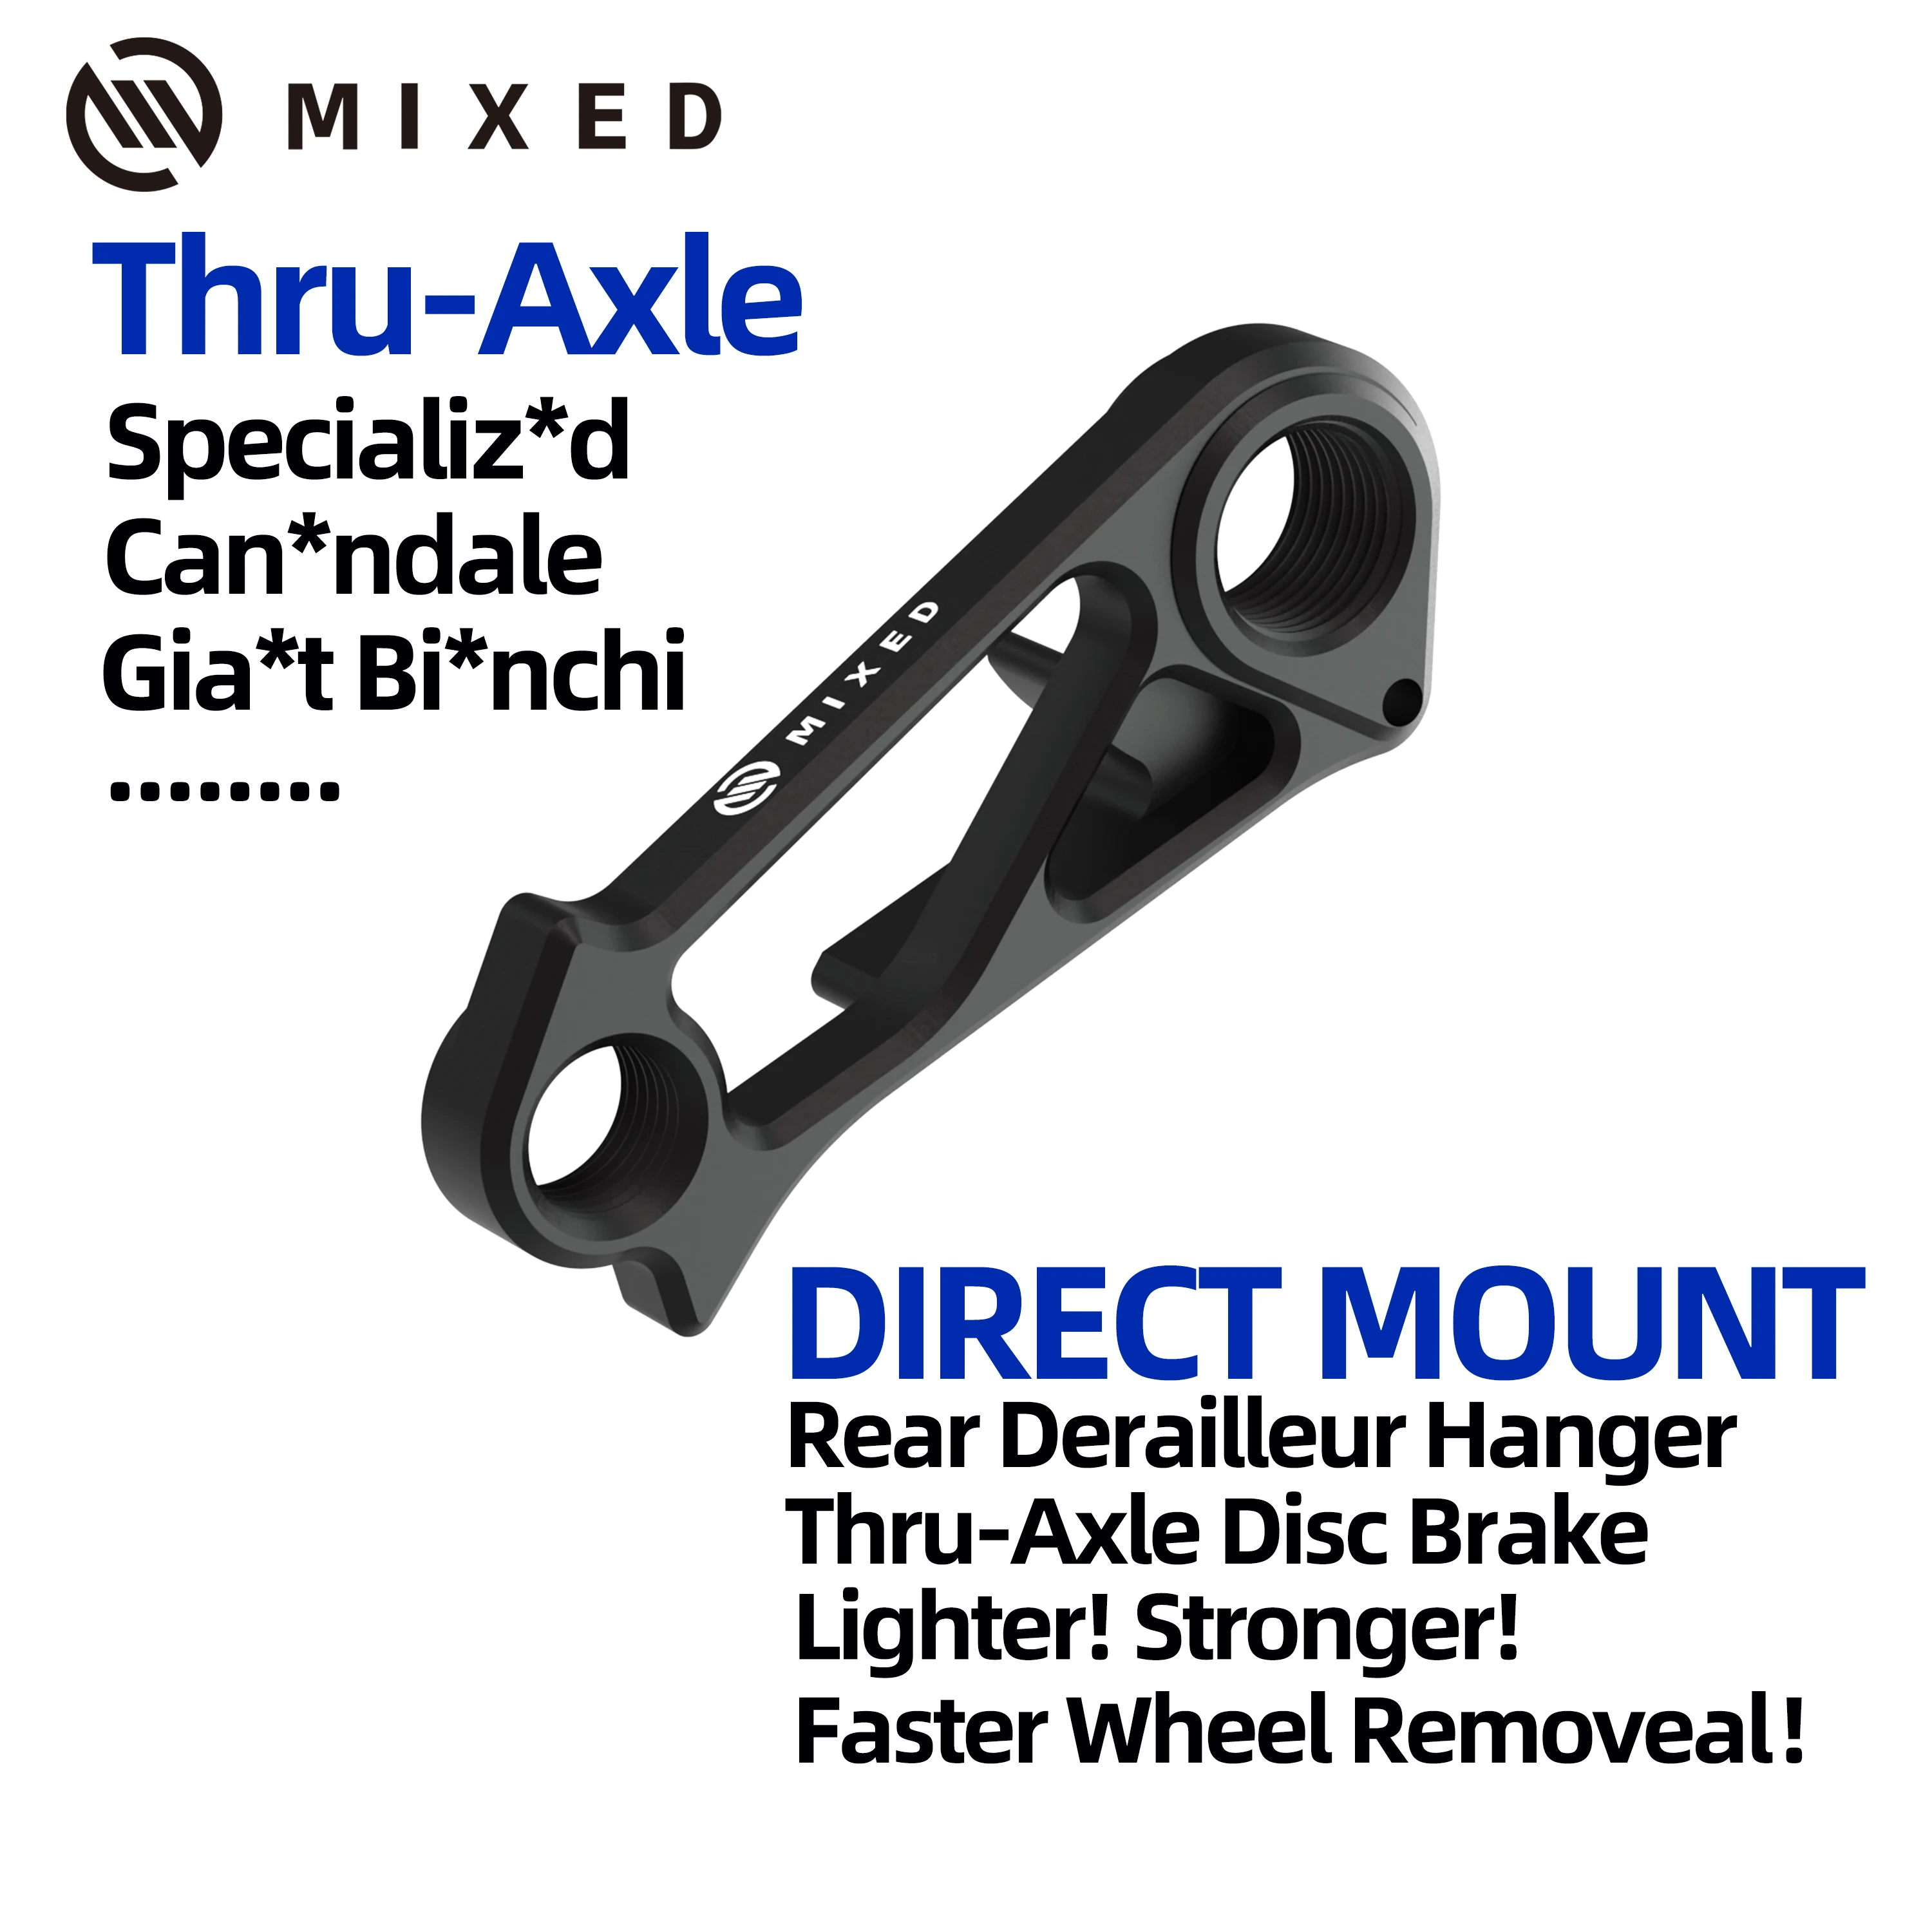 MIXED Direct Mount Rear Derailleur Hanger for Thru-axle Disc Brake Bicycle Road Bike